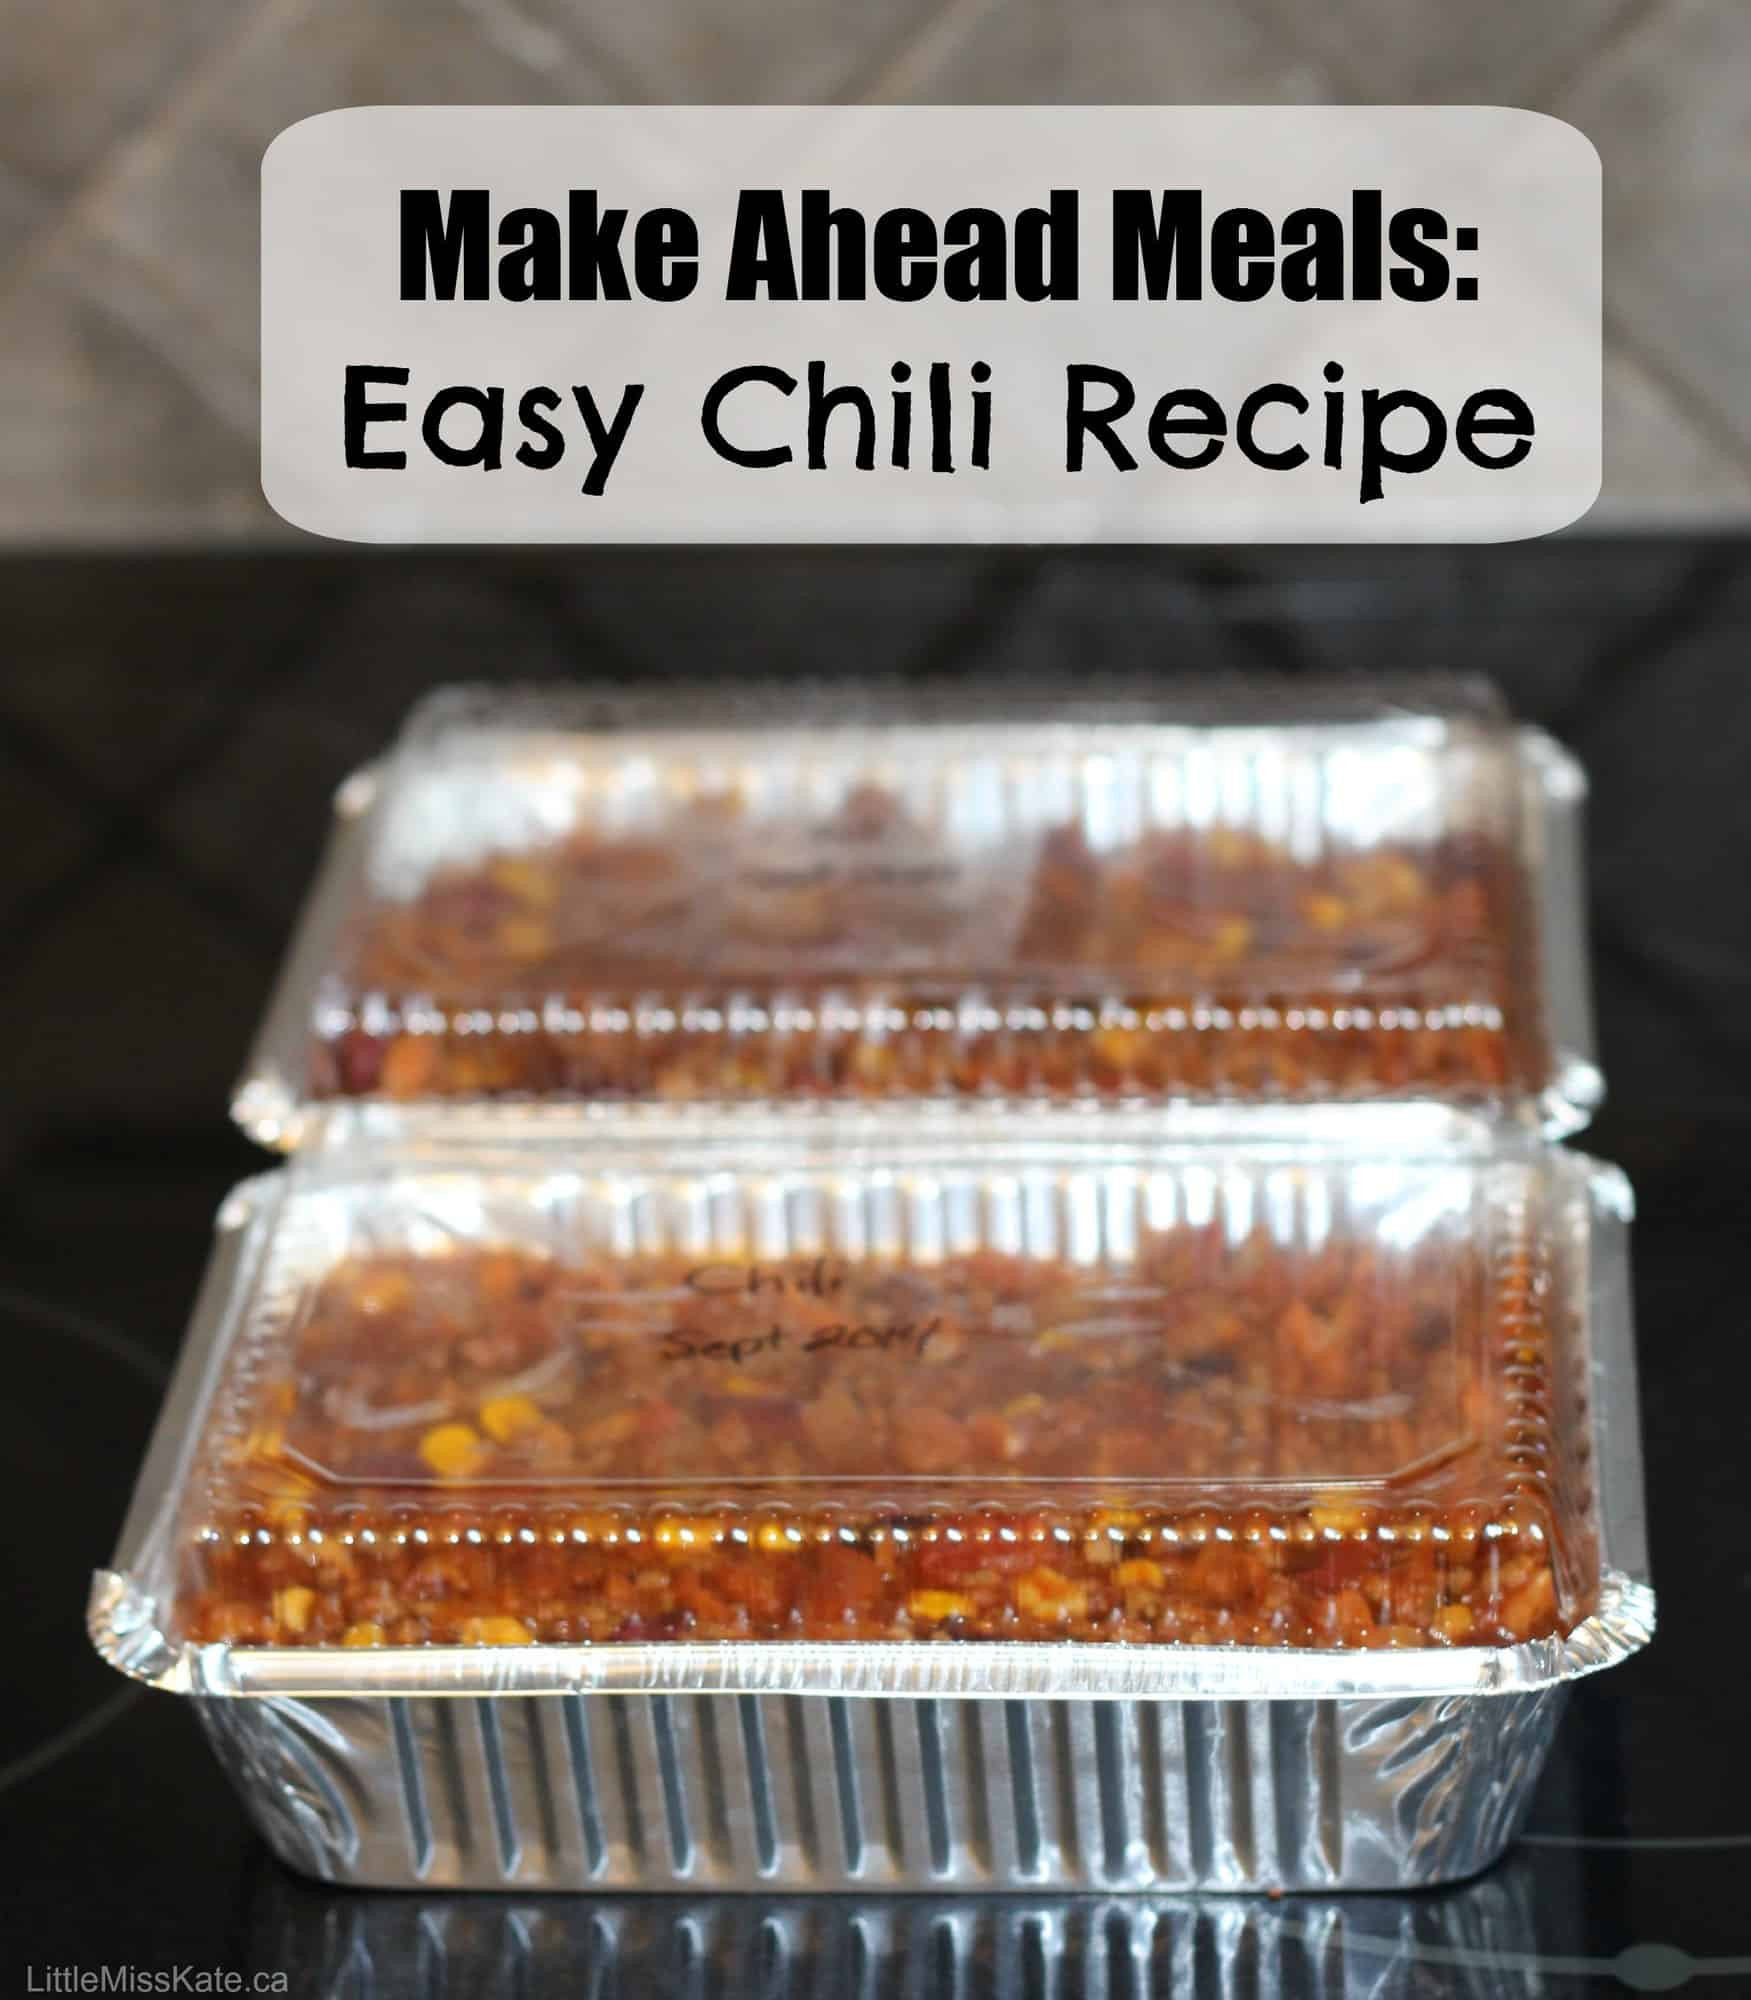 Make Ahead Dinner Recipe
 Make Ahead Meals Easy Chili Recipe FreezerMeals Little